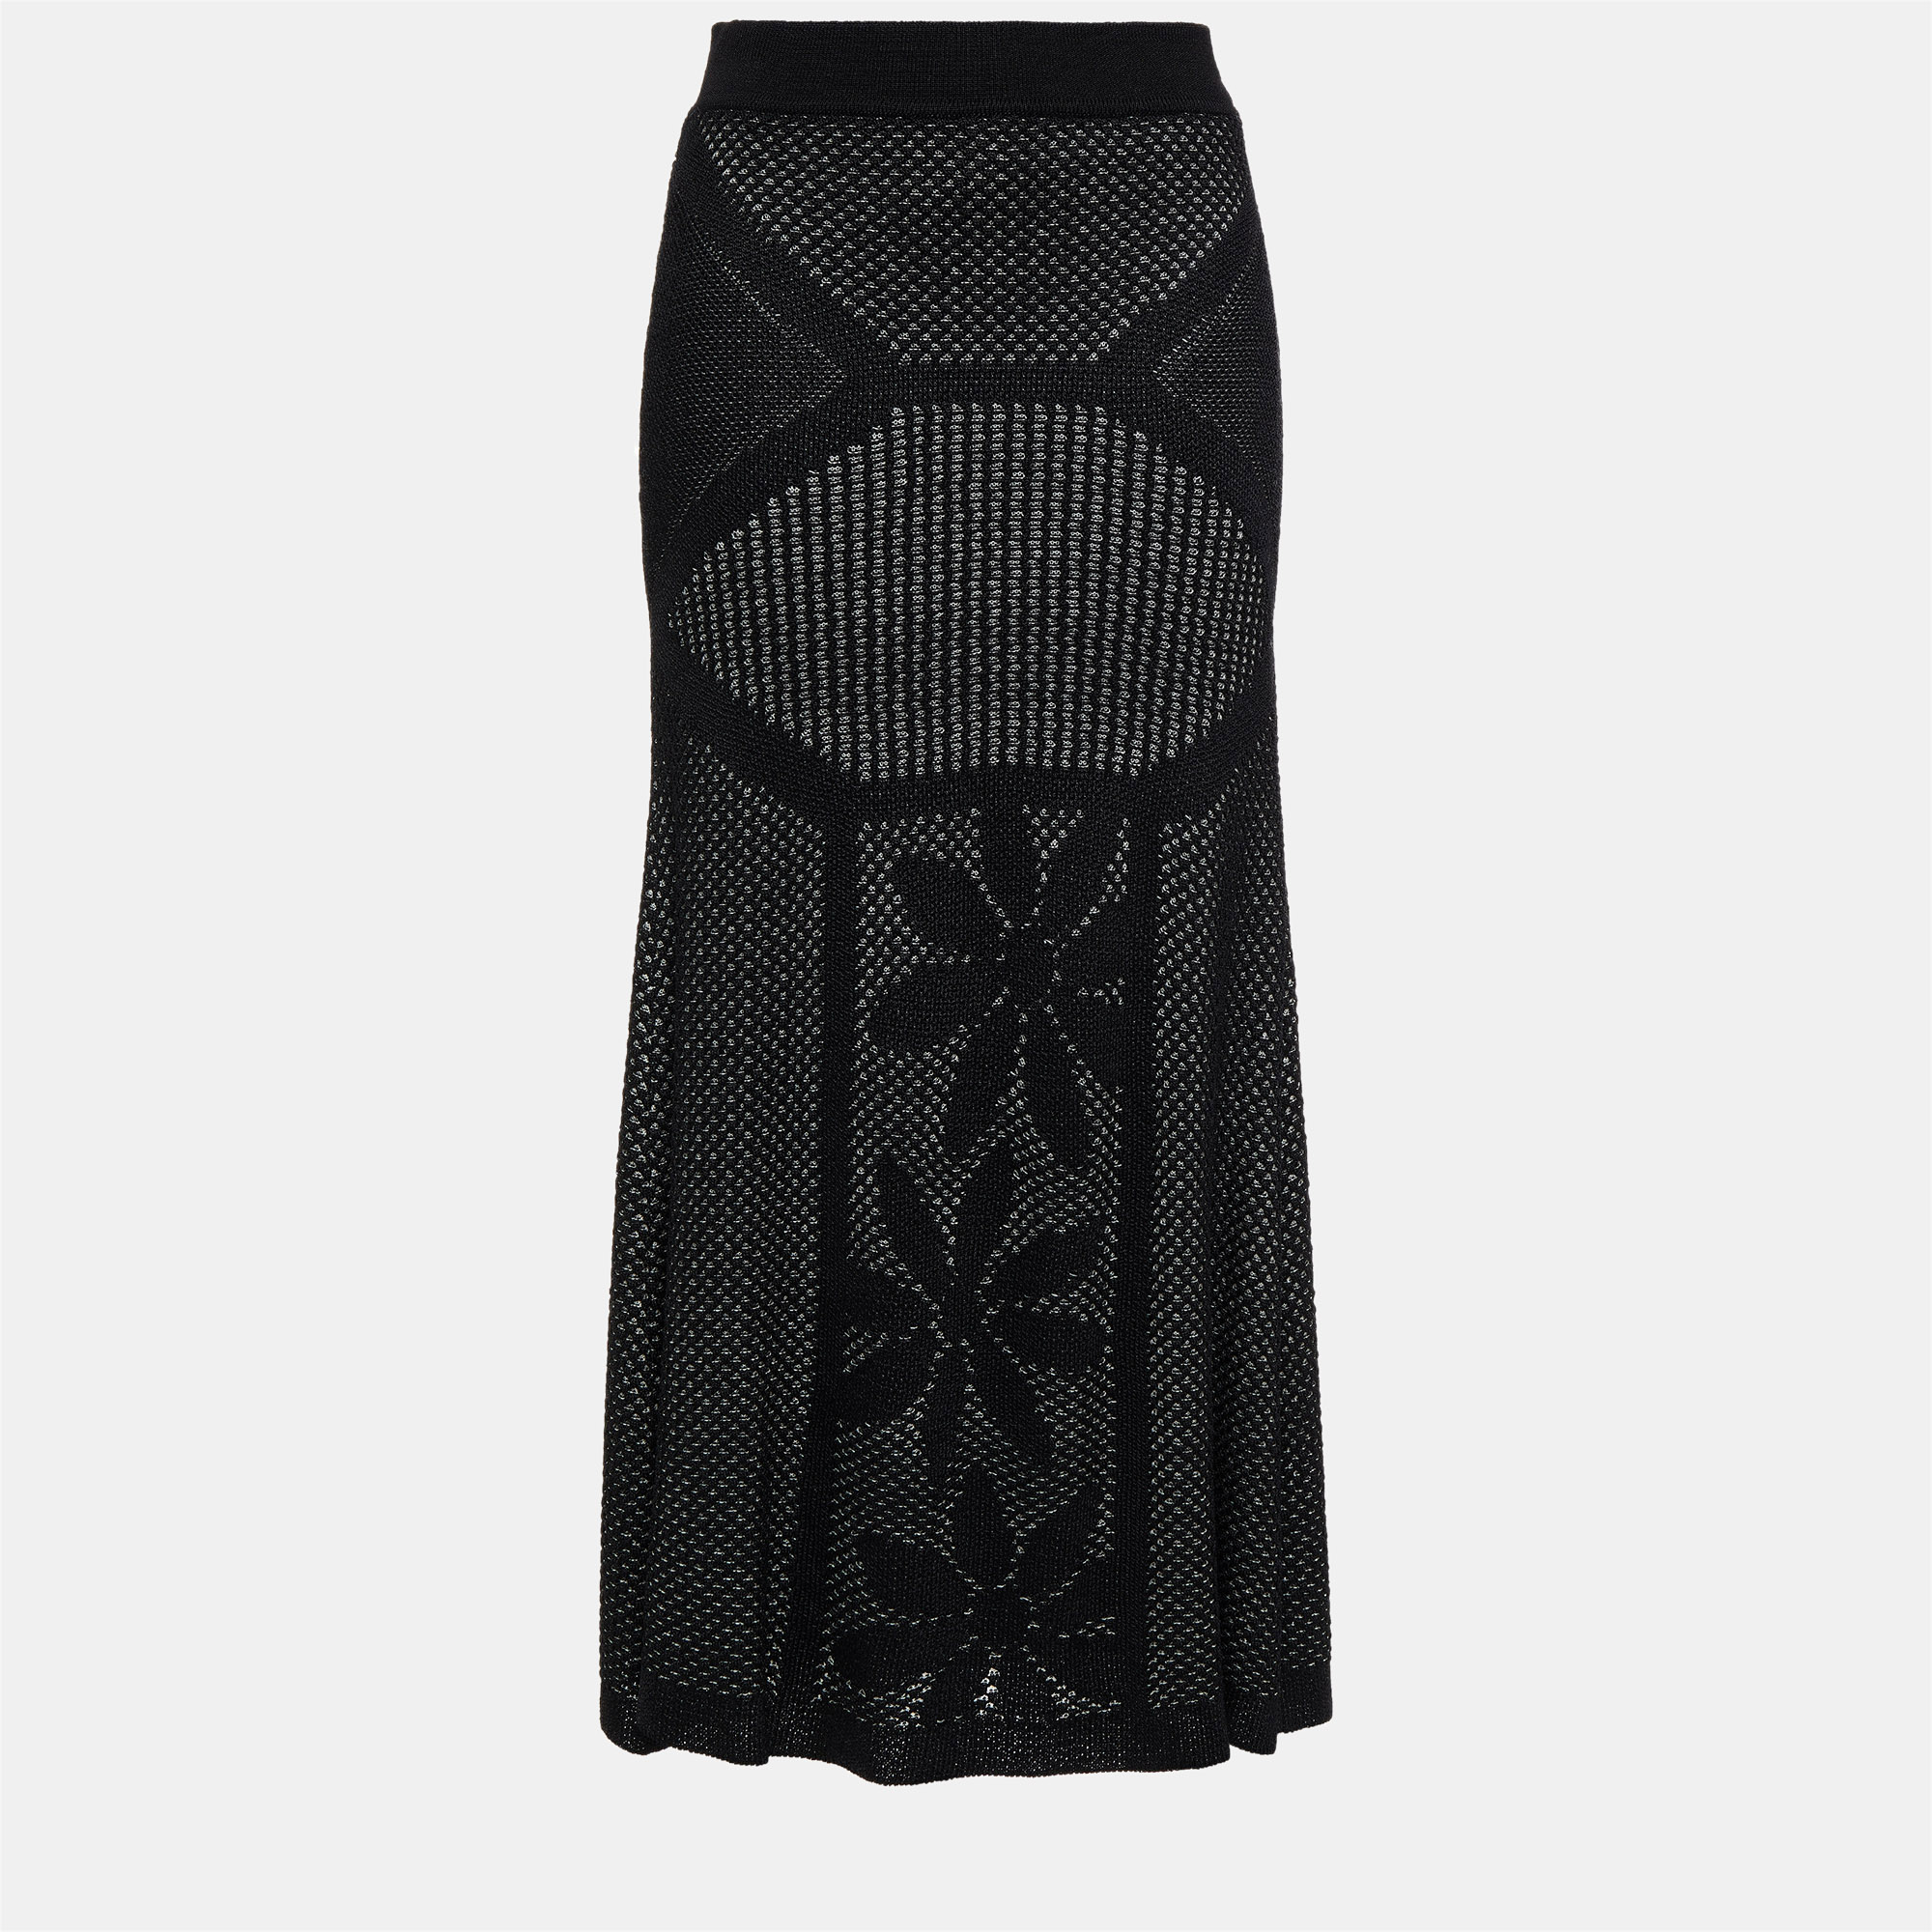 M missoni collection black patterned knit midi skirt s